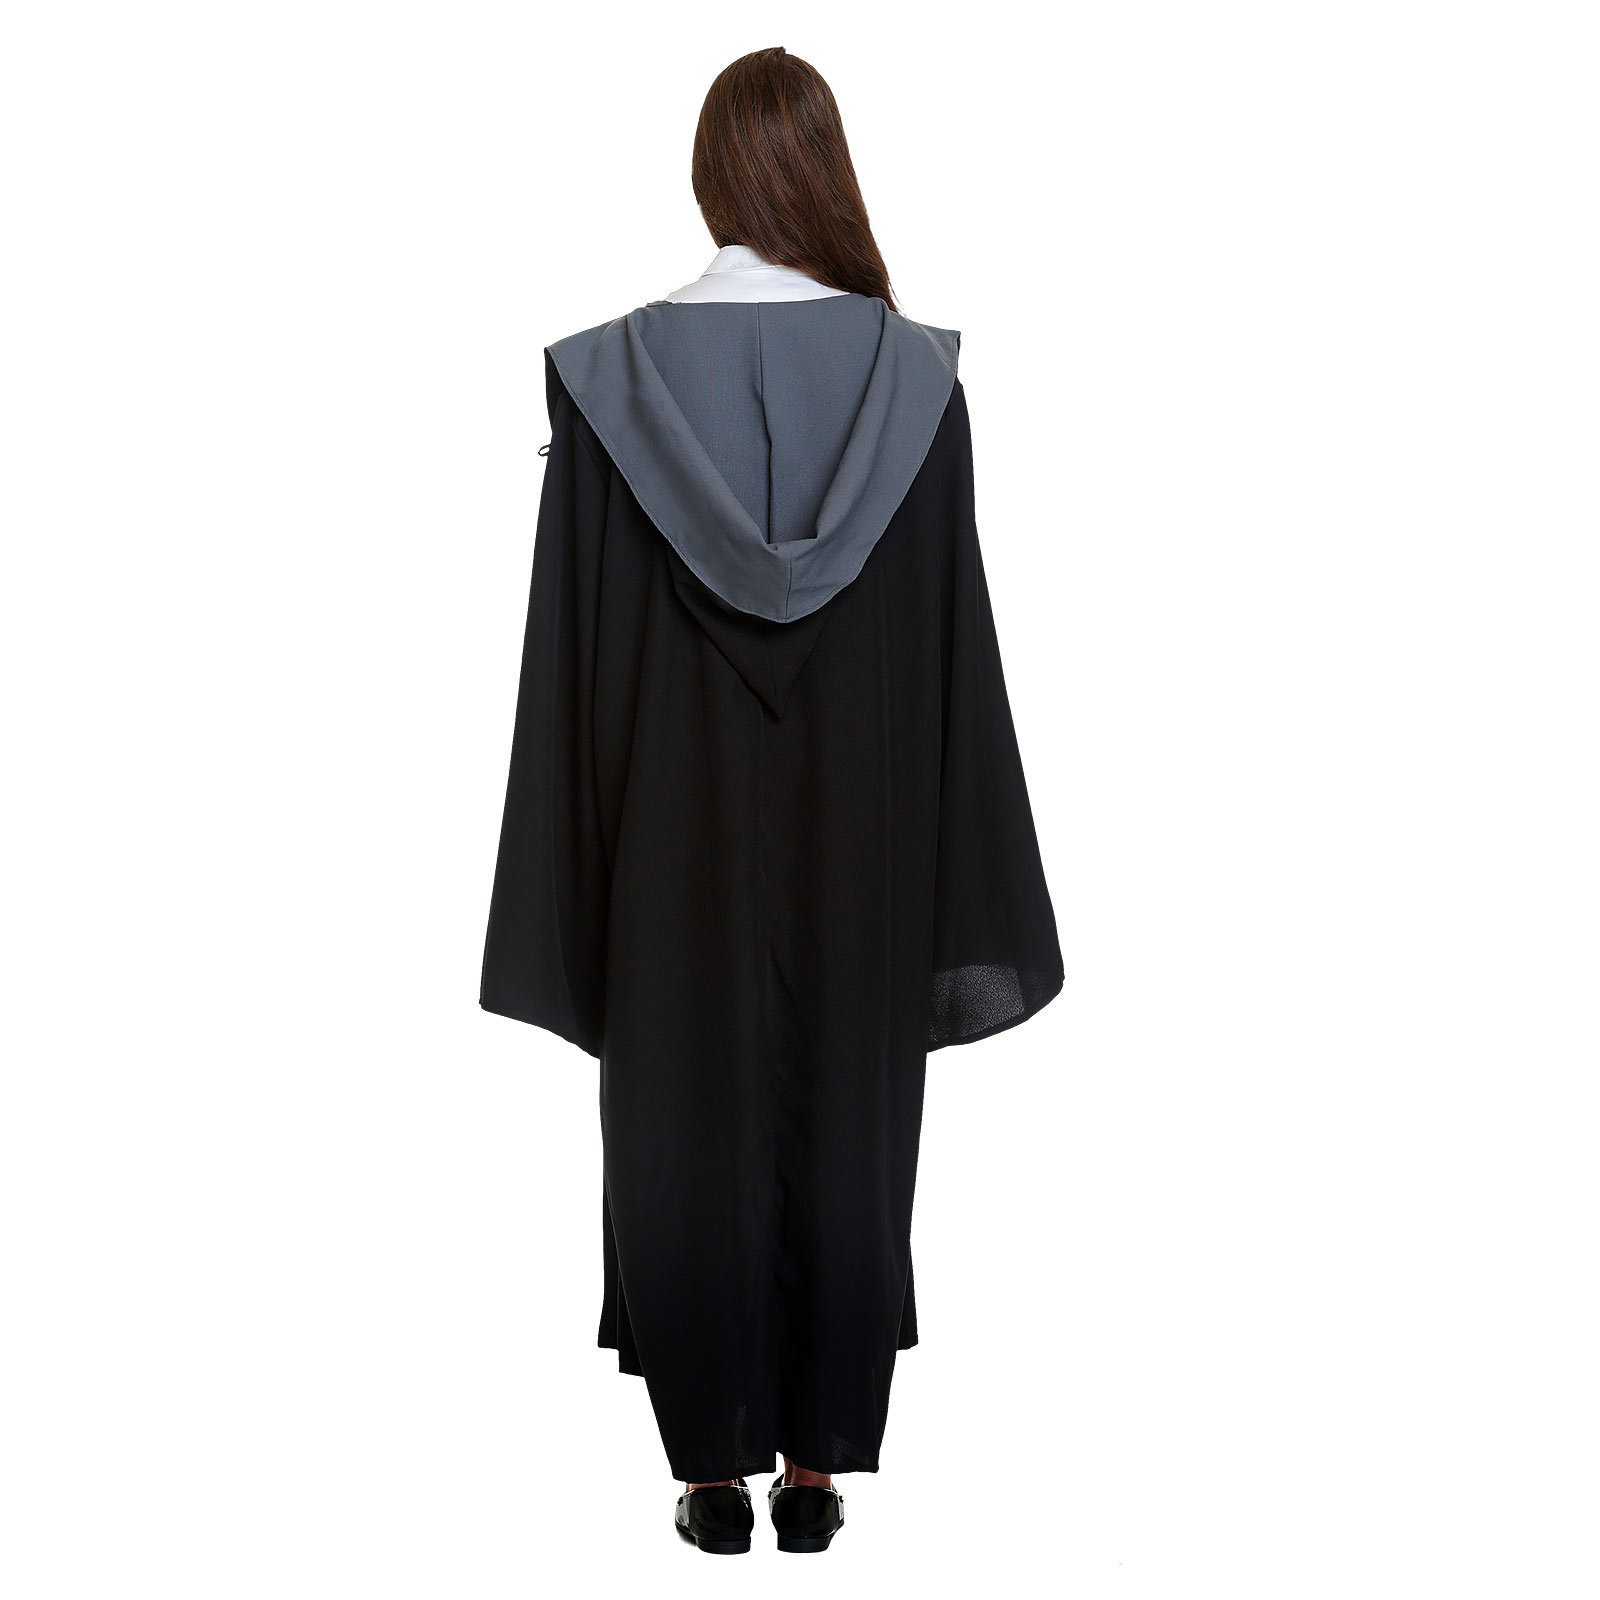 Zauberer Kostüm Robe mit Kapuze für Harry Potter Fans